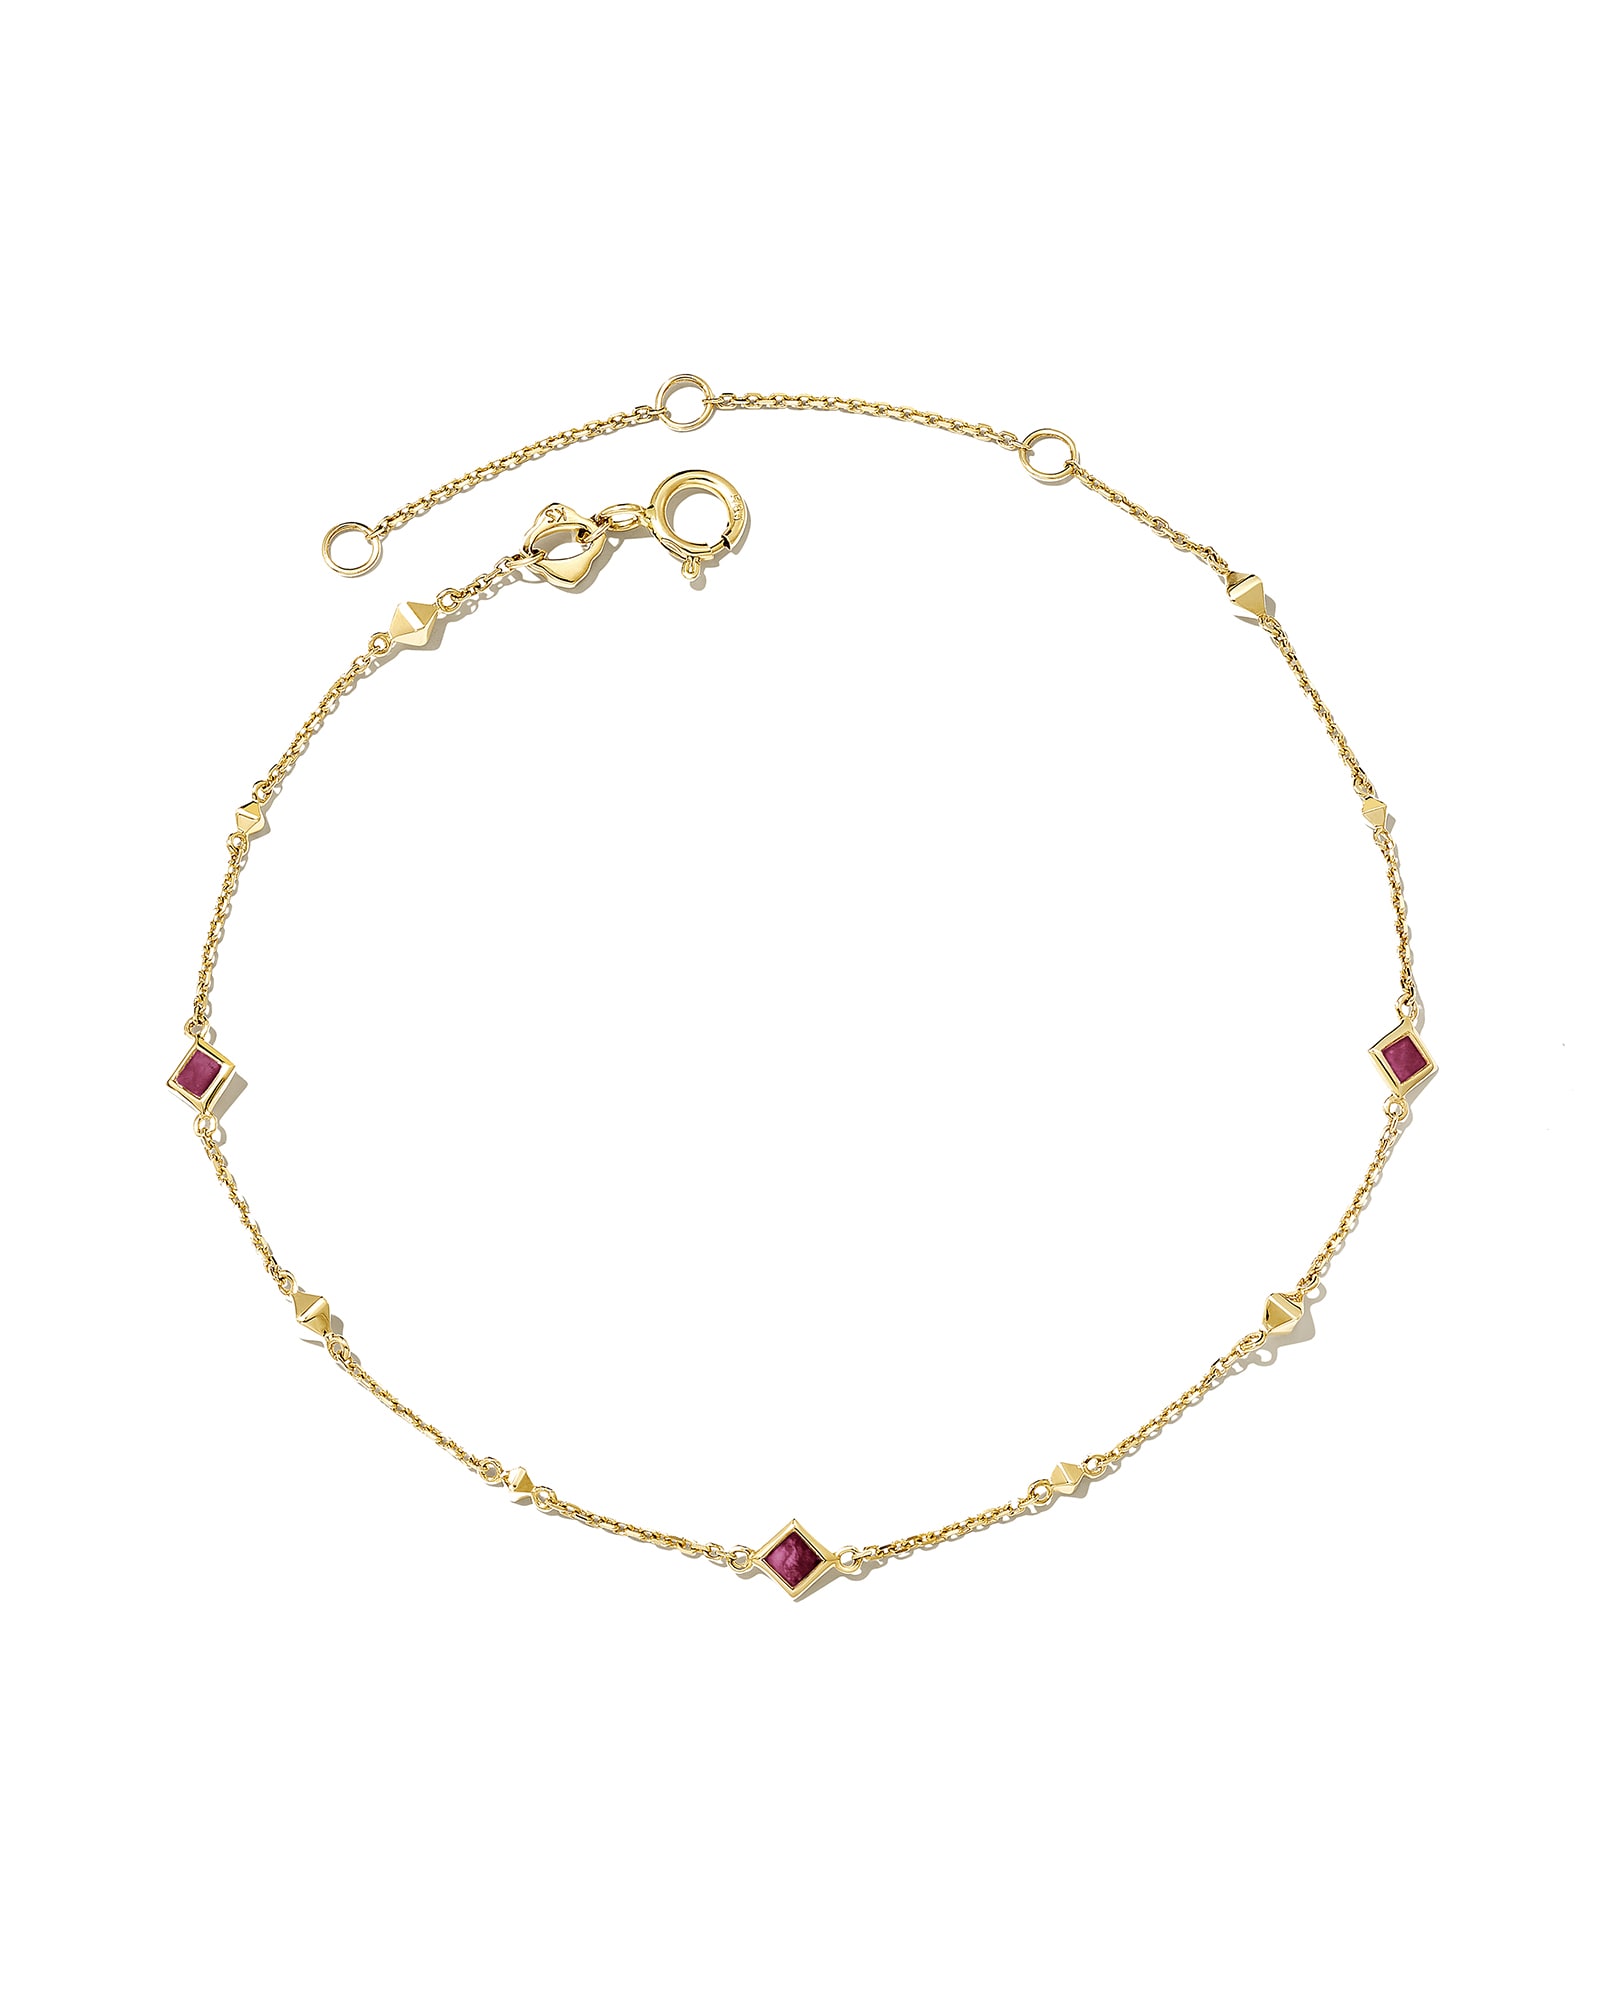 Michelle 14k Yellow Gold Delicate Chain Bracelet in Ruby